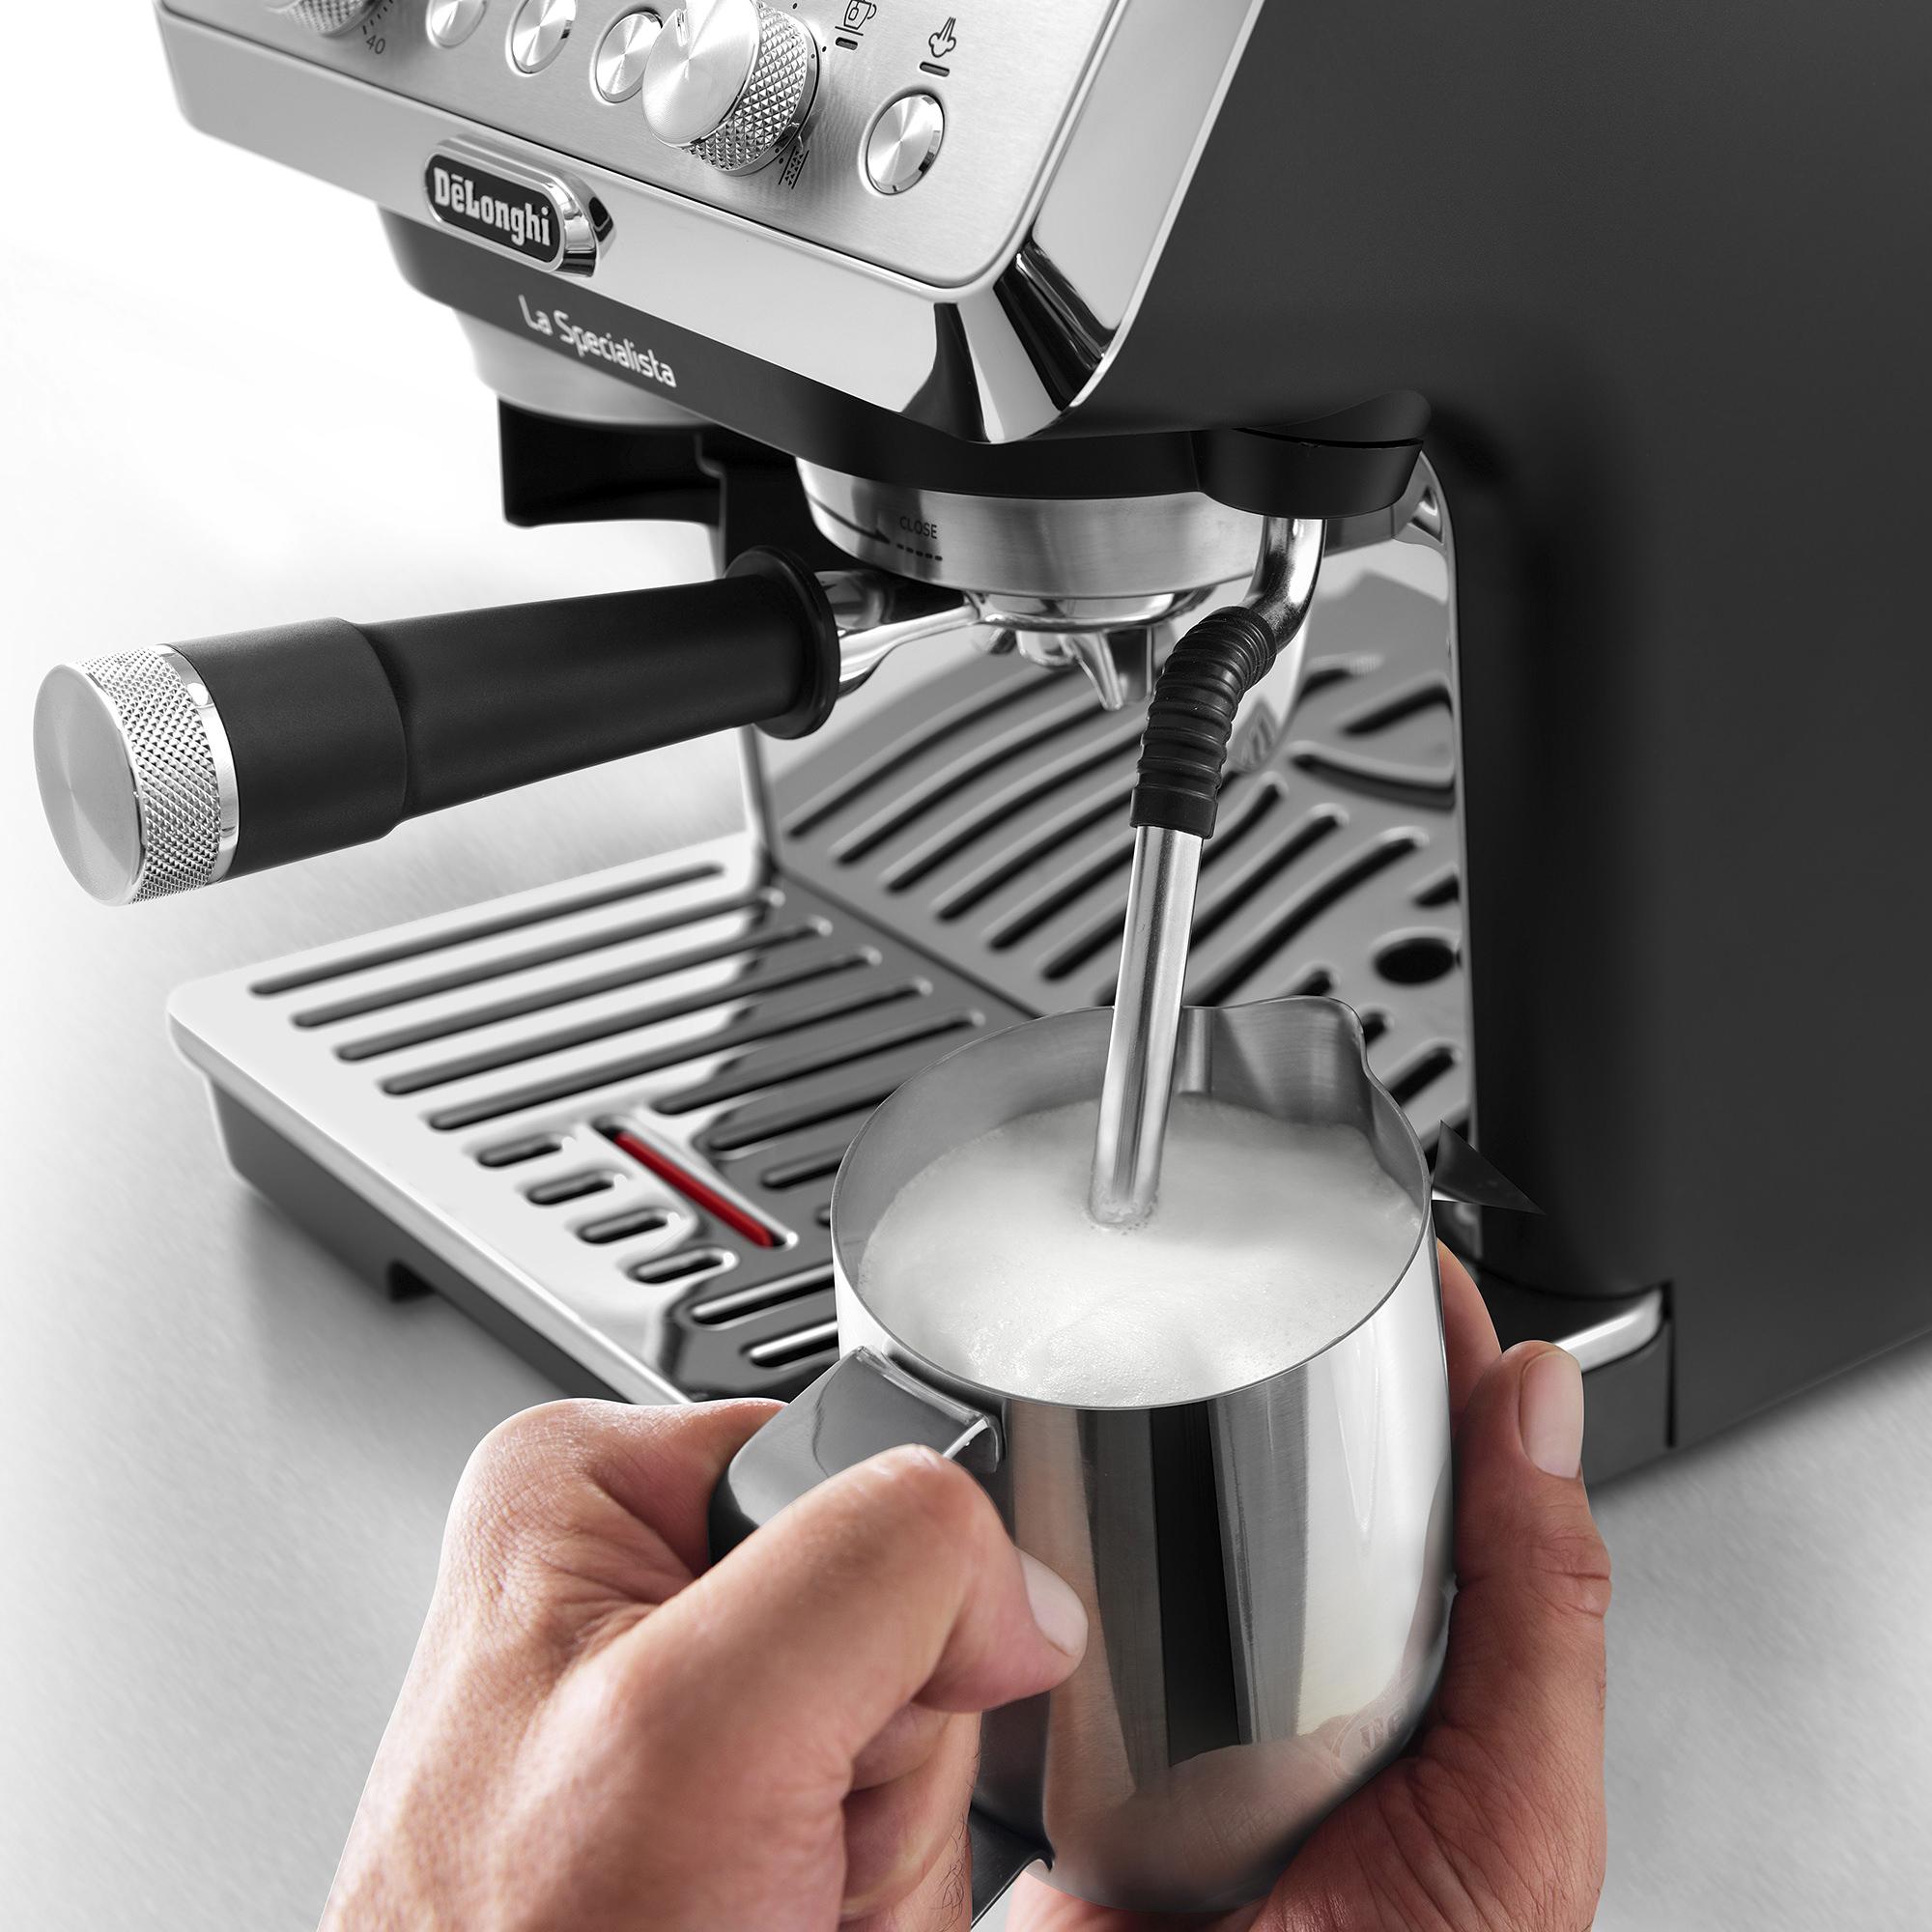 DeLonghi La Specialista Arte EC9155MB Espresso Coffee Machine Black Image 5